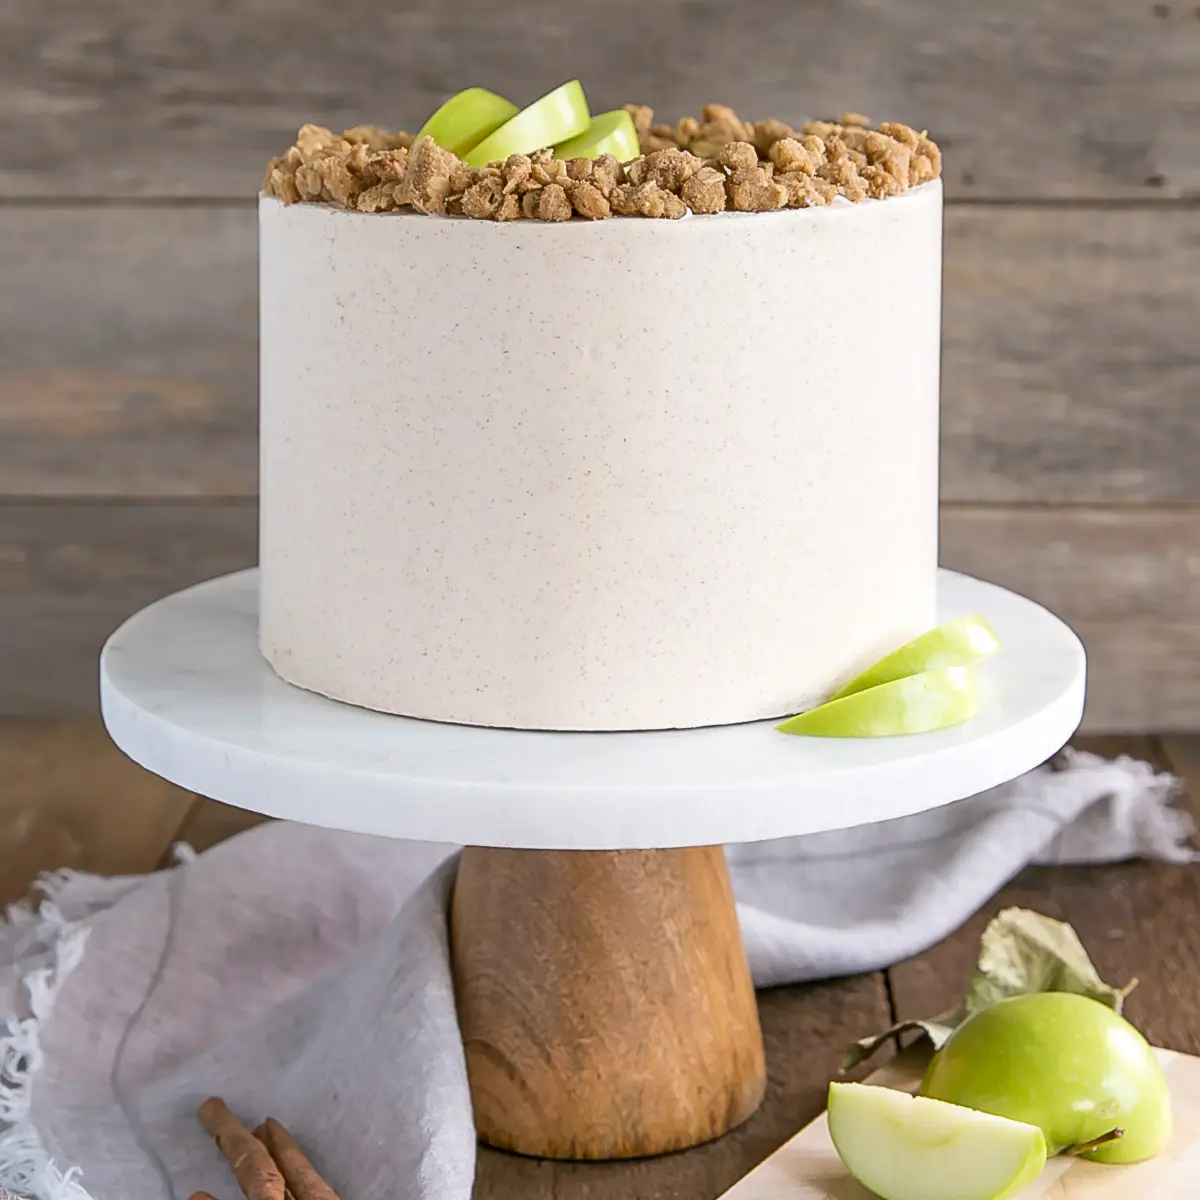 10 Best Dump Cake Apple Pie Filling Recipes | Yummly